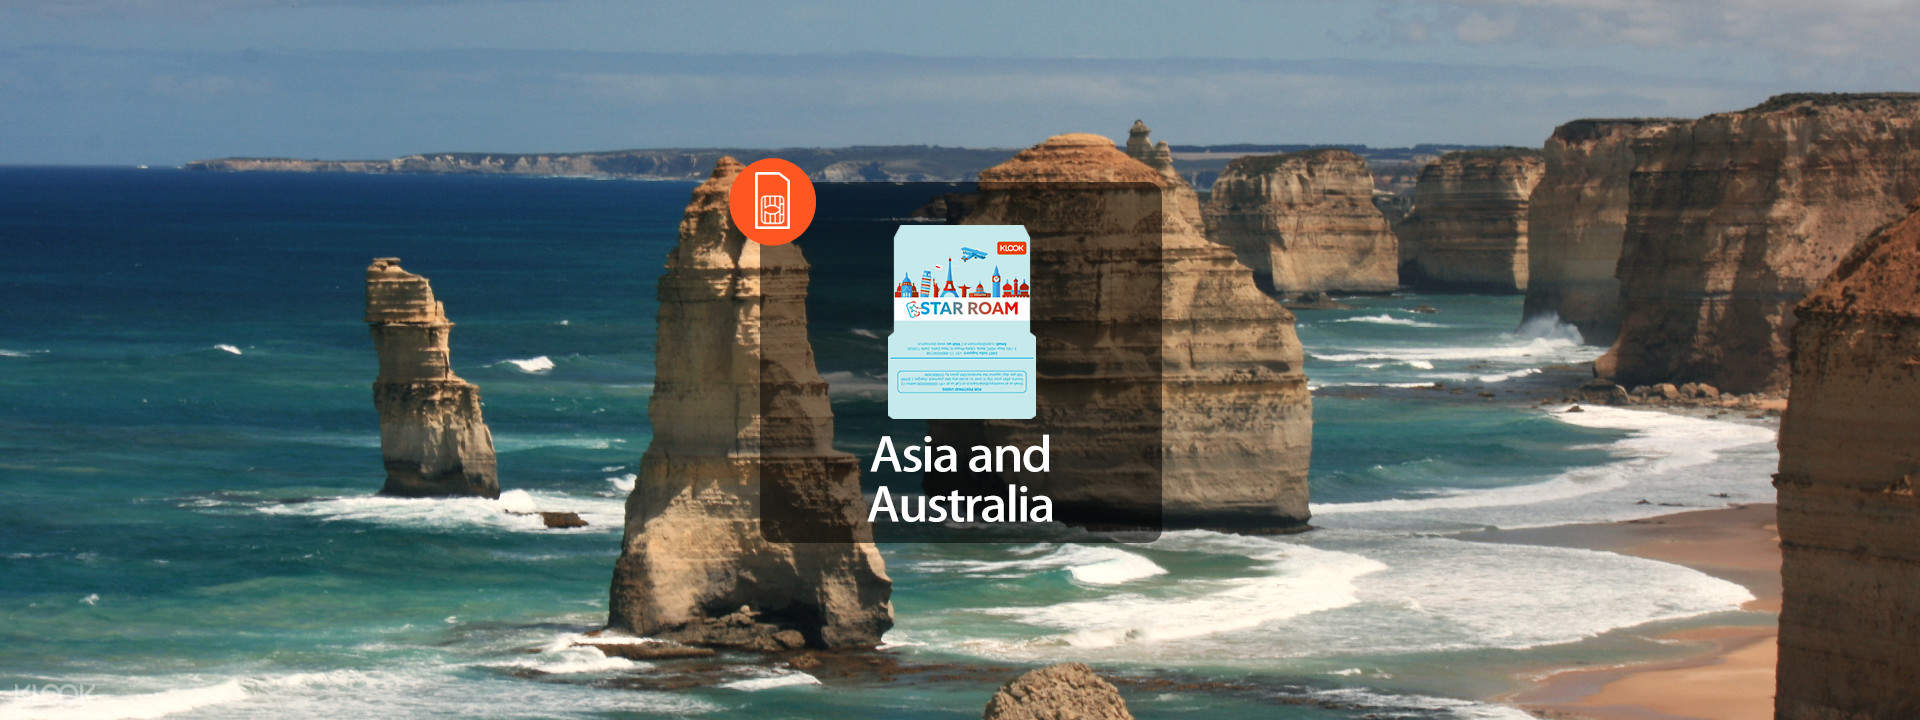 StarRoam 4G SIM Card for Asia & Australia - Available ...